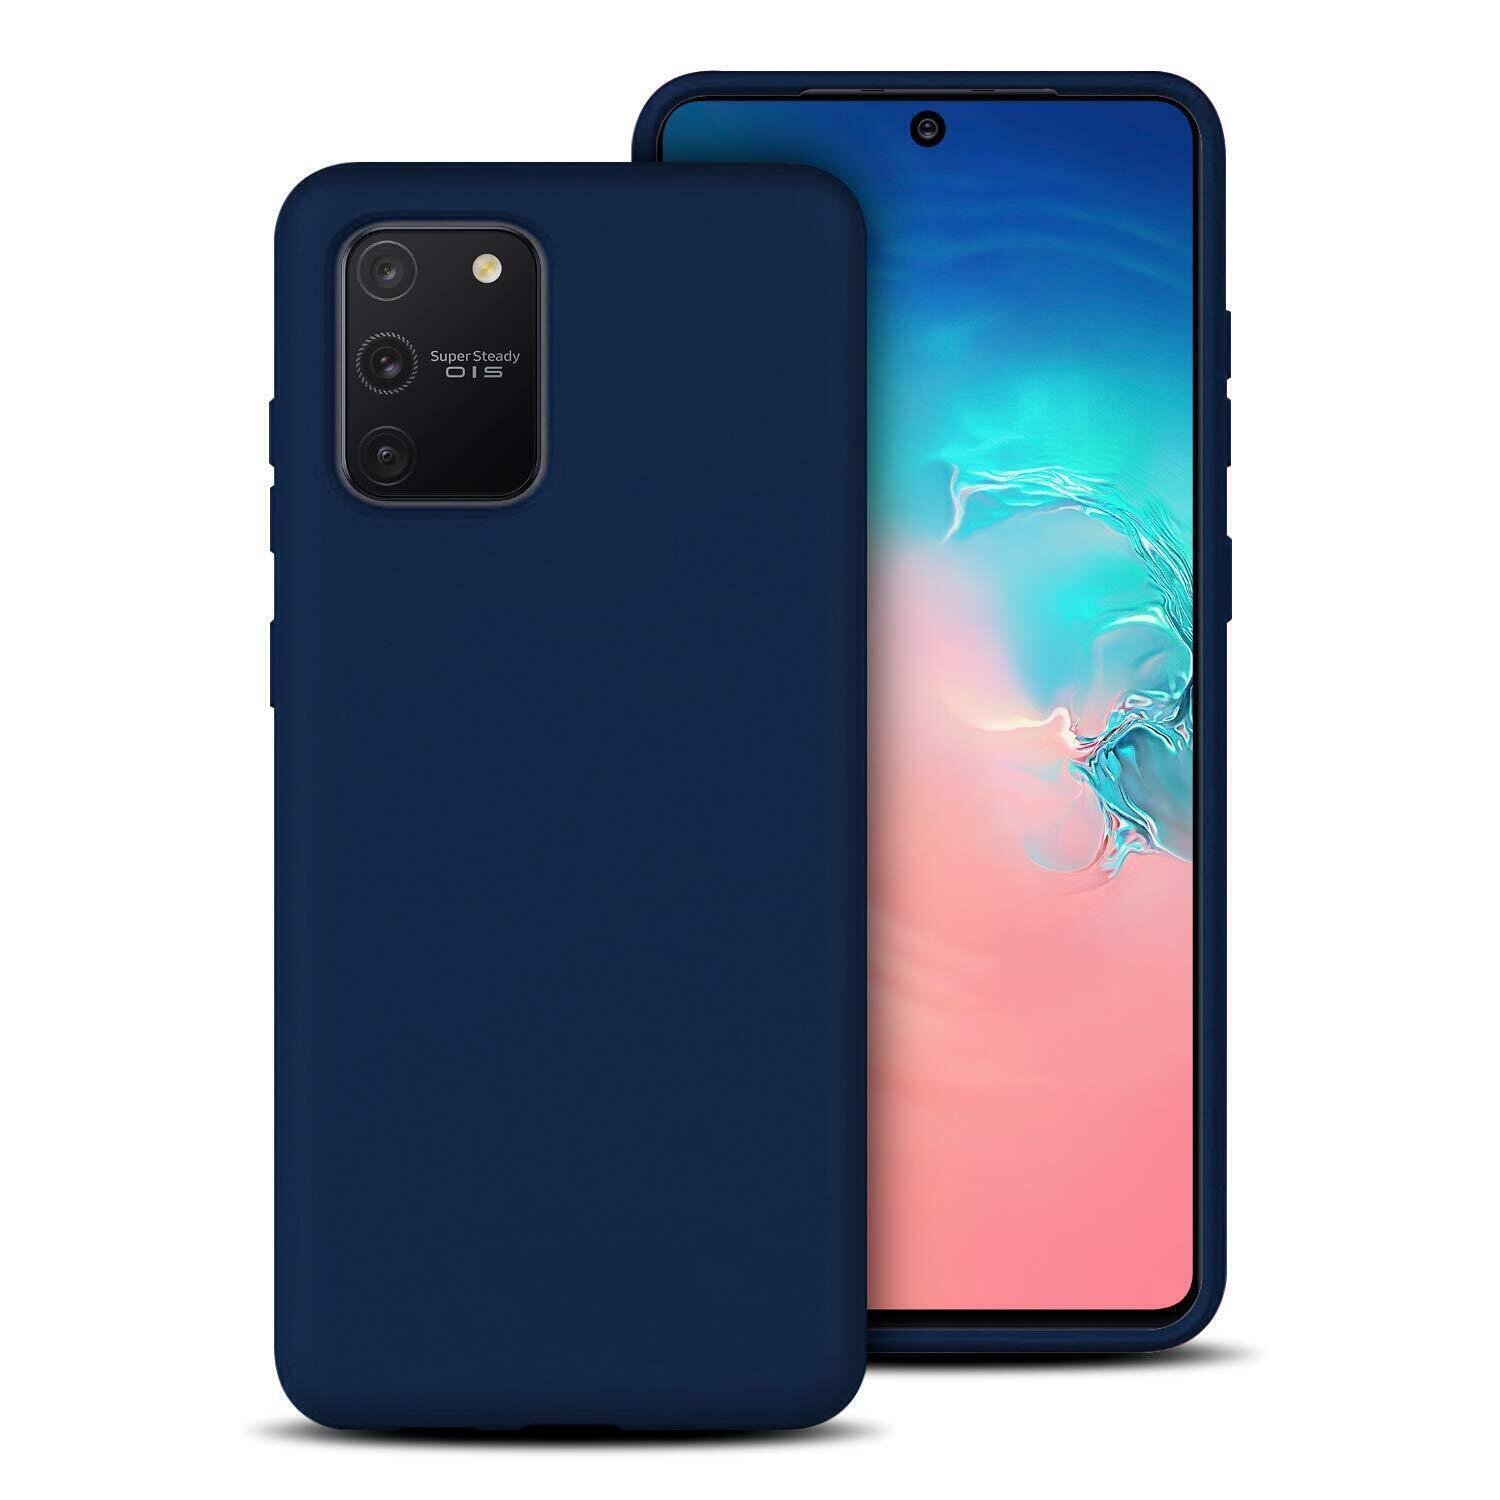 Komass Samsung Galaxy S10 Lite Liquid Silicone Back Cover, Blue